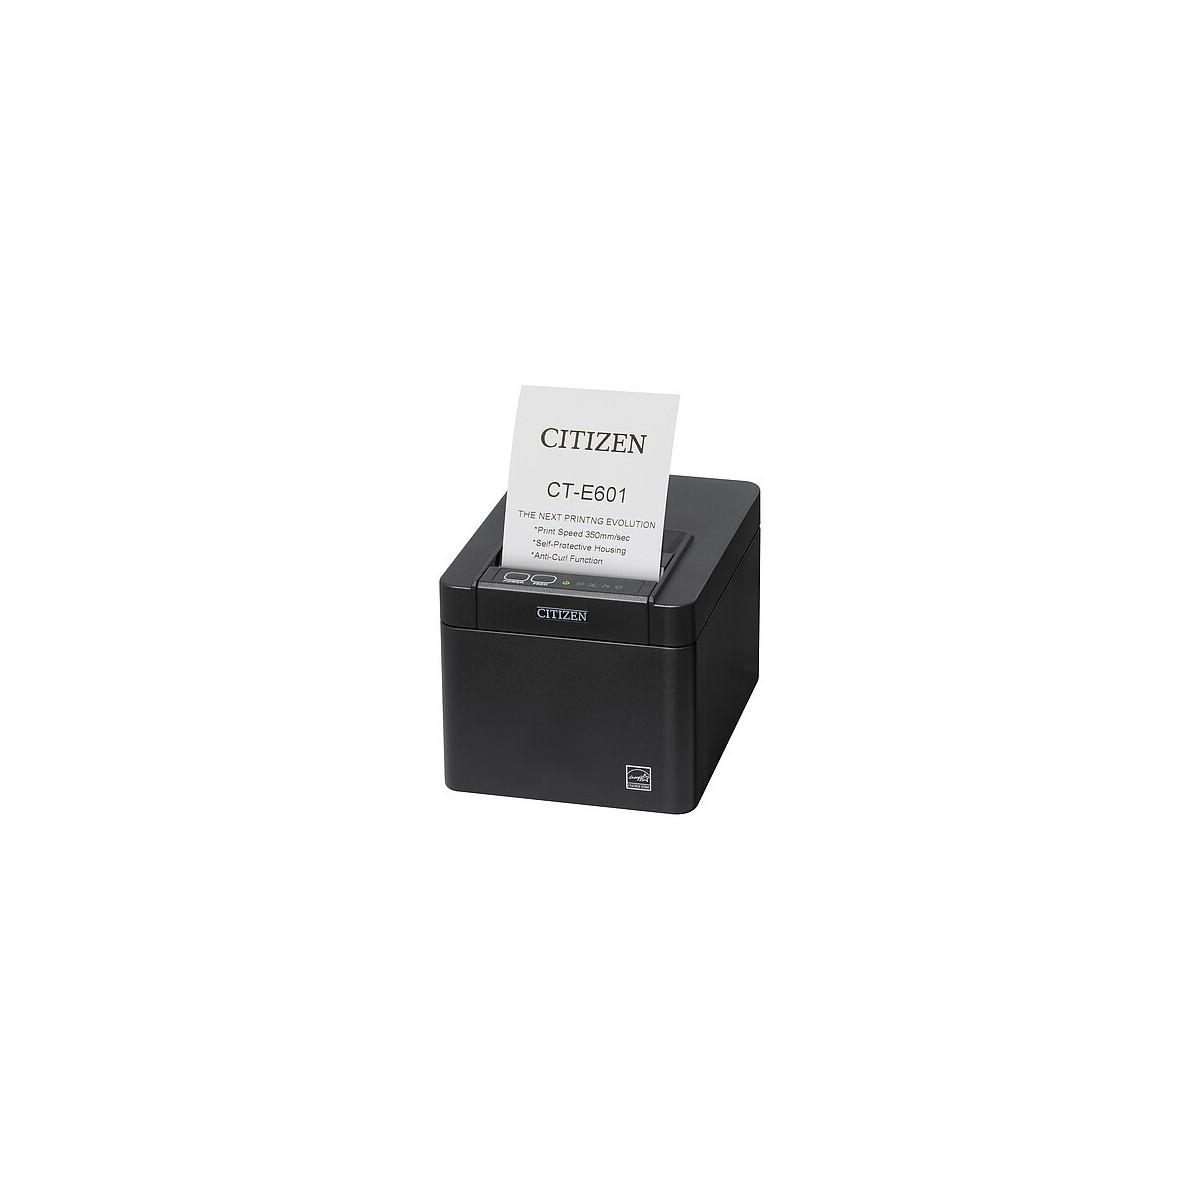 Citizen CT-E601 Printer Bluetooth USB Black - Printer